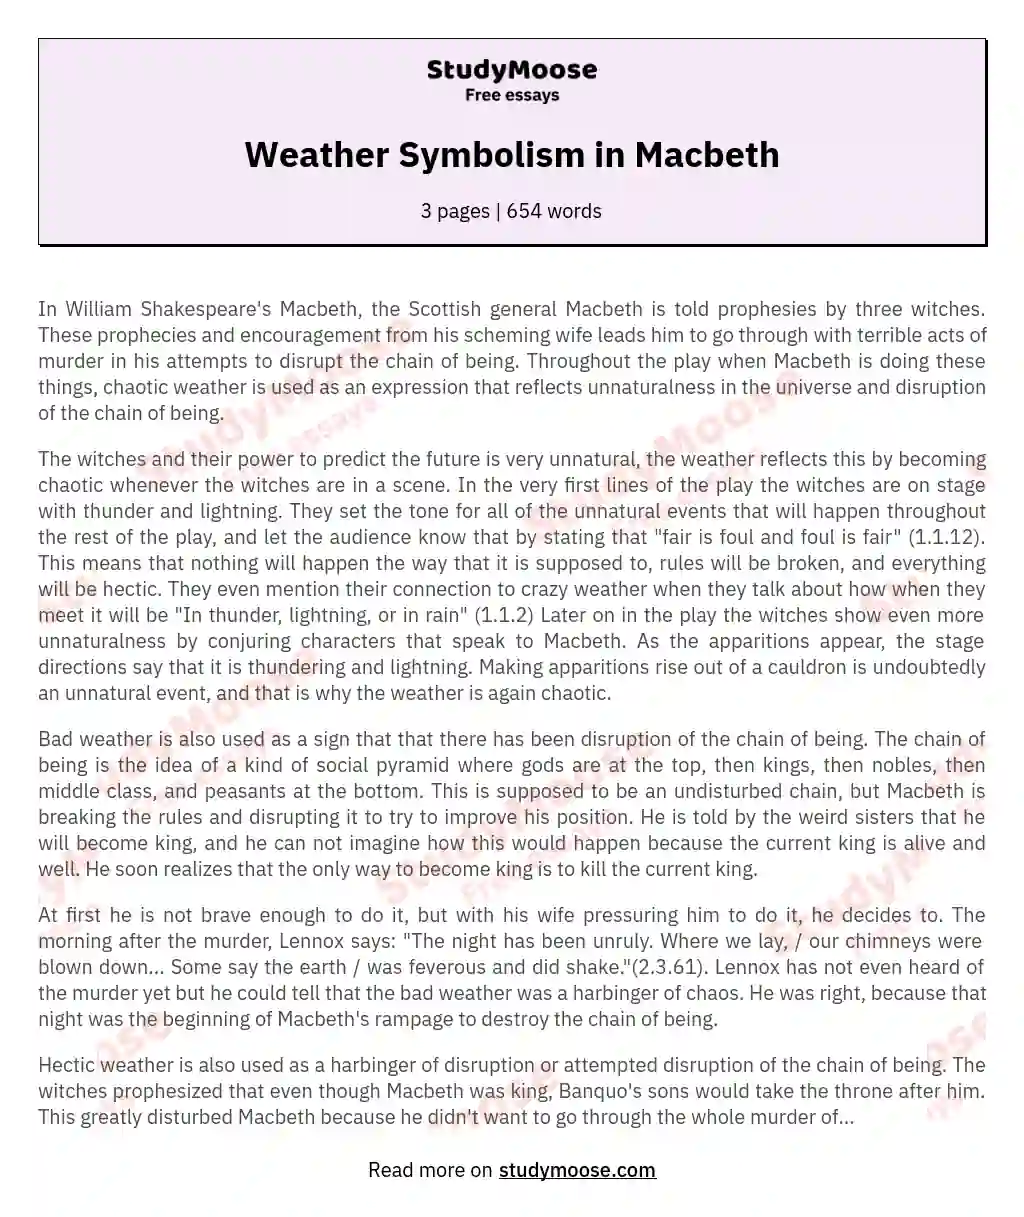 Weather Symbolism in Macbeth essay